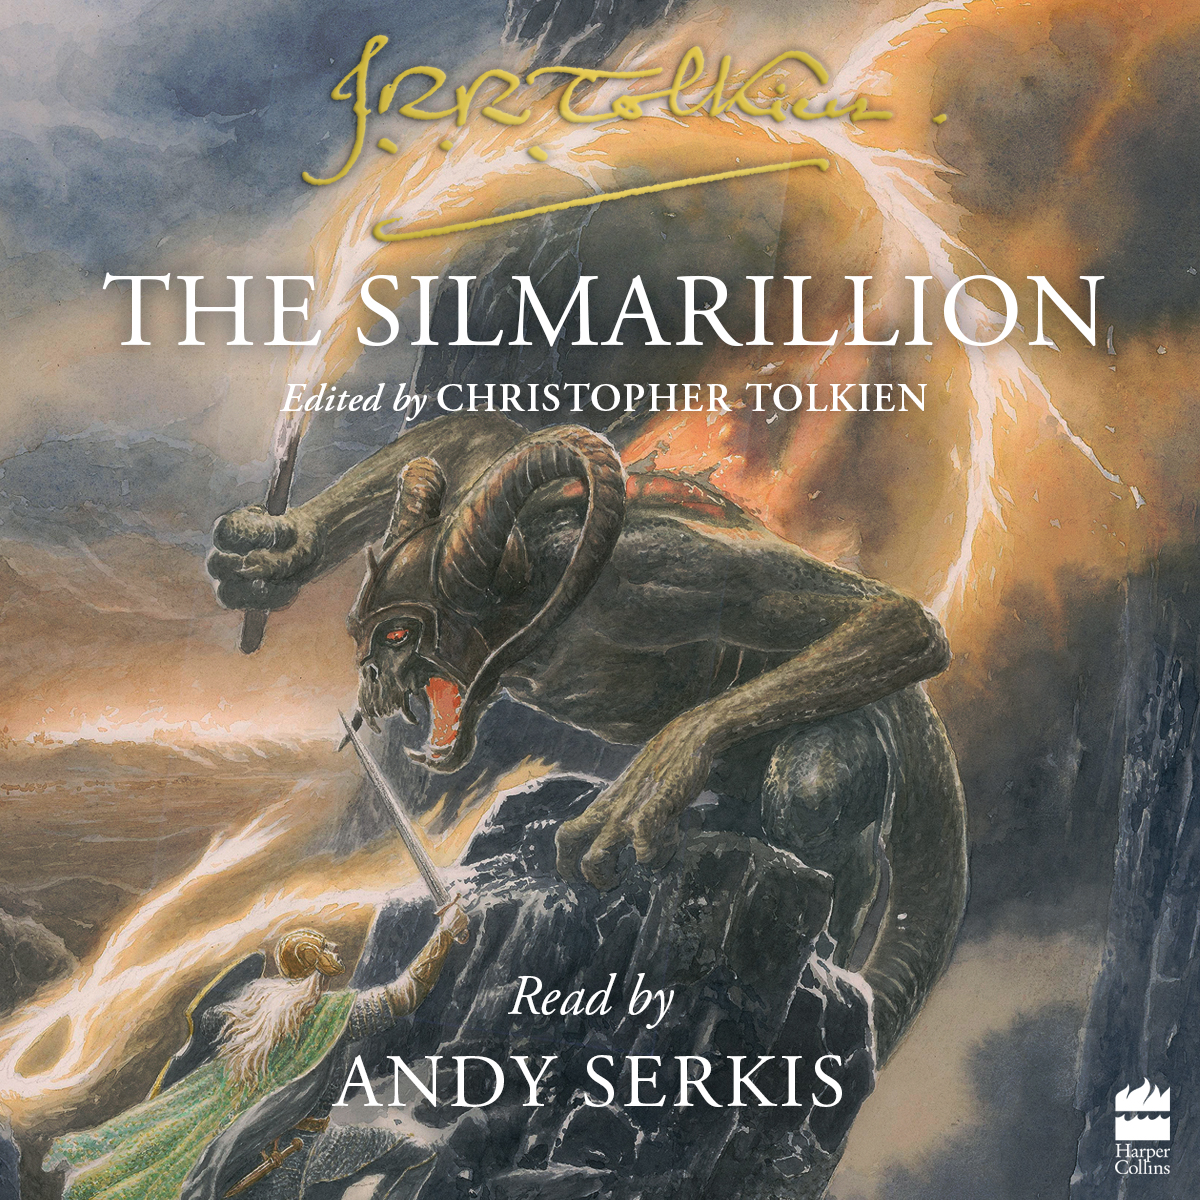 Andy Serkis Silmarillion cover.jpg